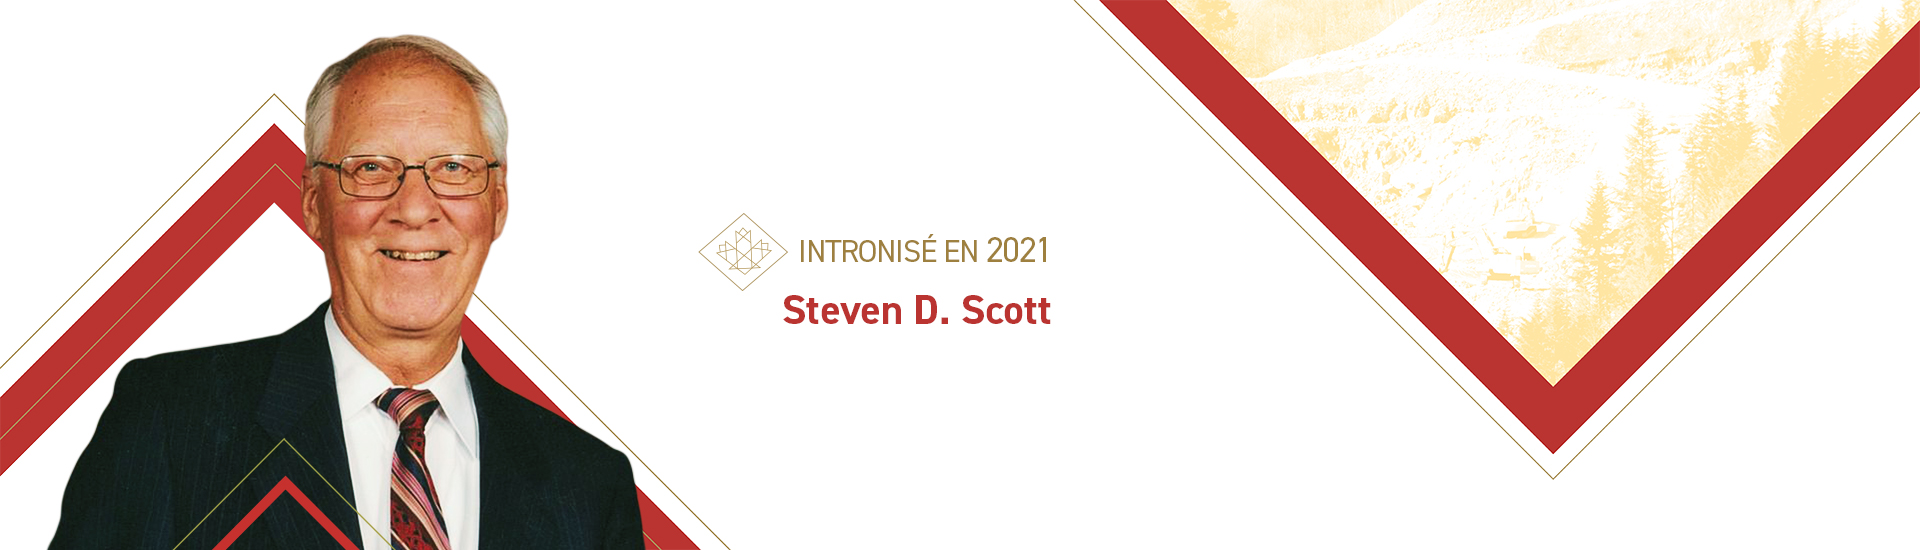 Steven D. Scott (1941 - 2019)